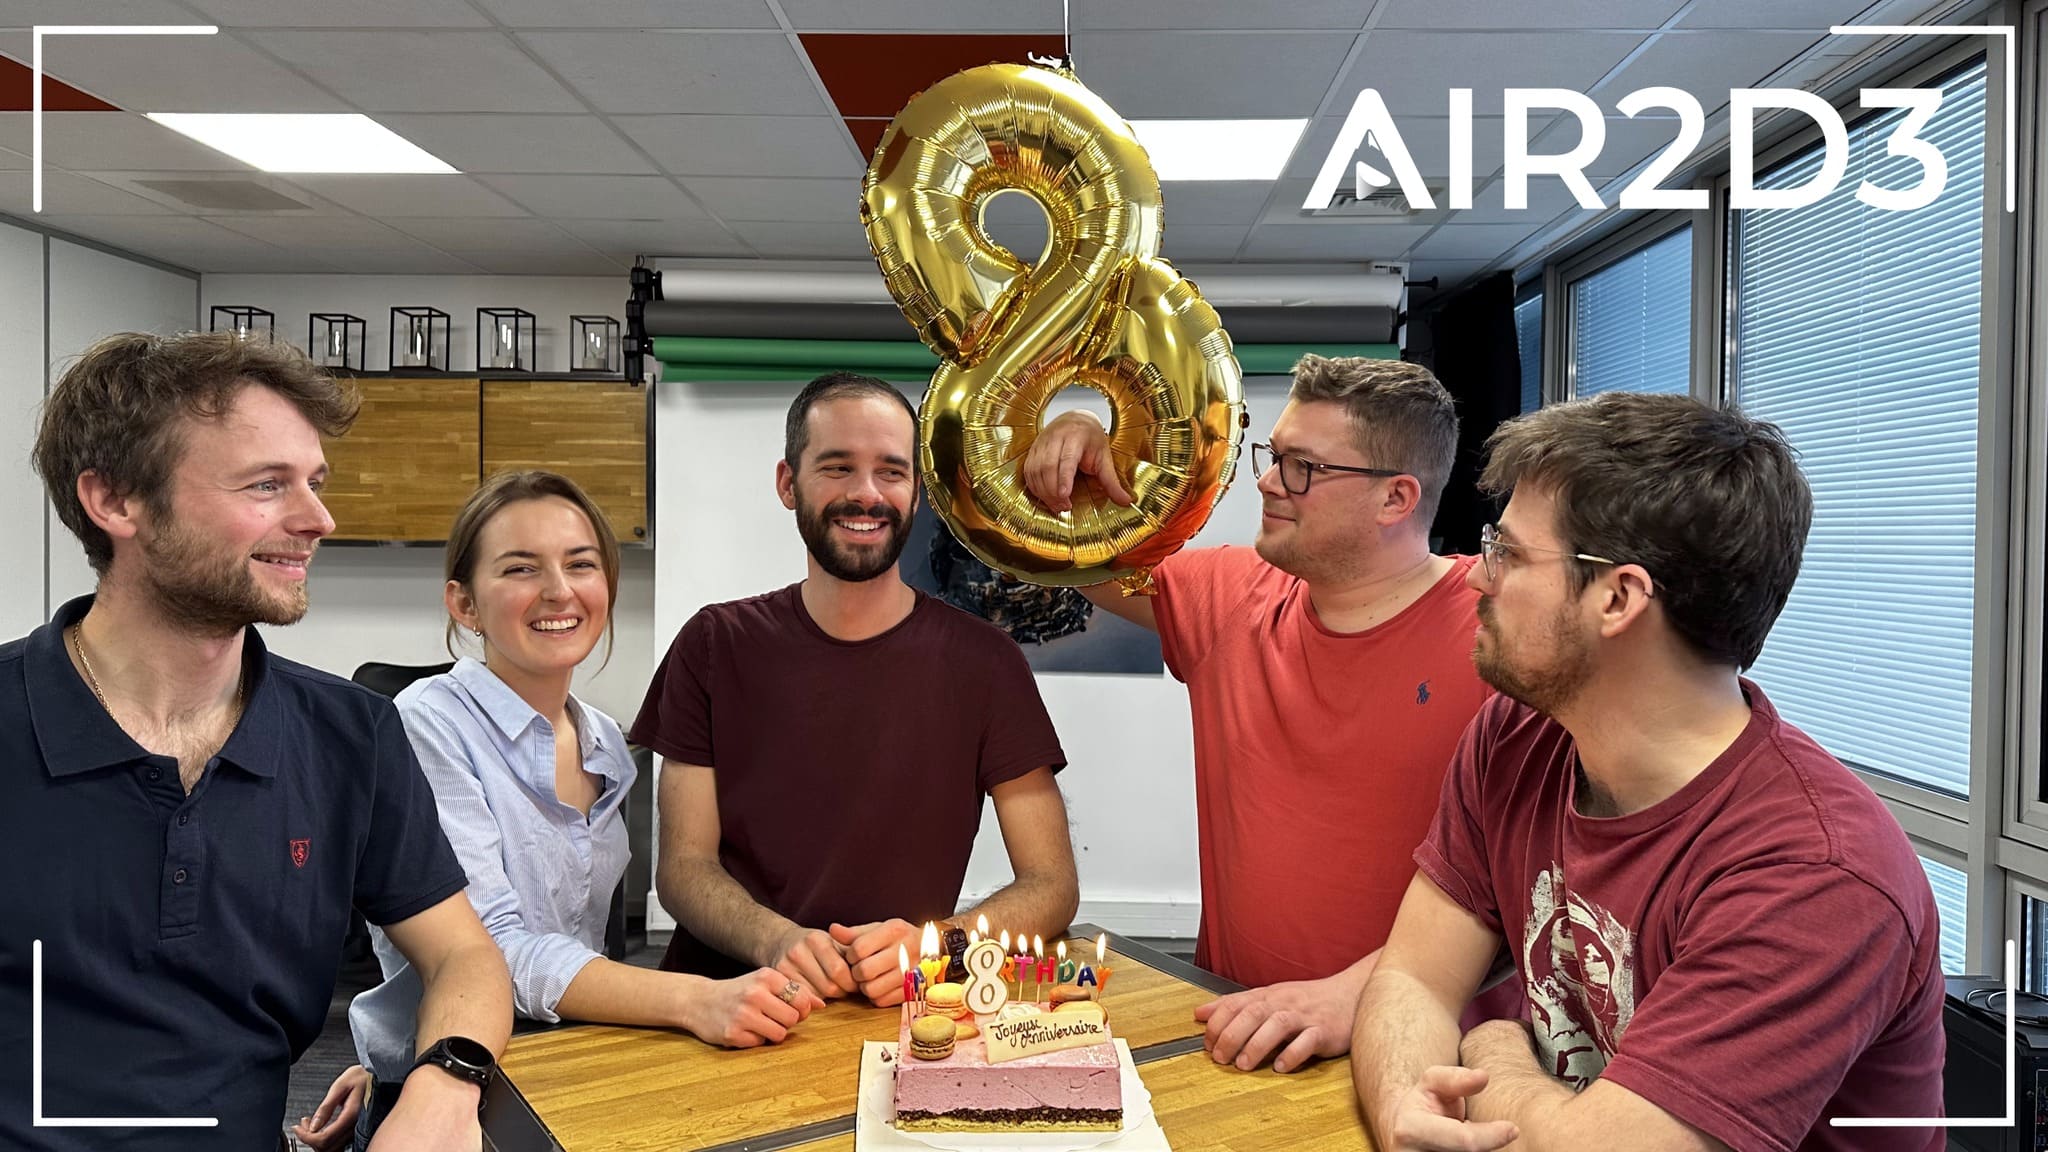 Air2D3 anniversaire 8 ans